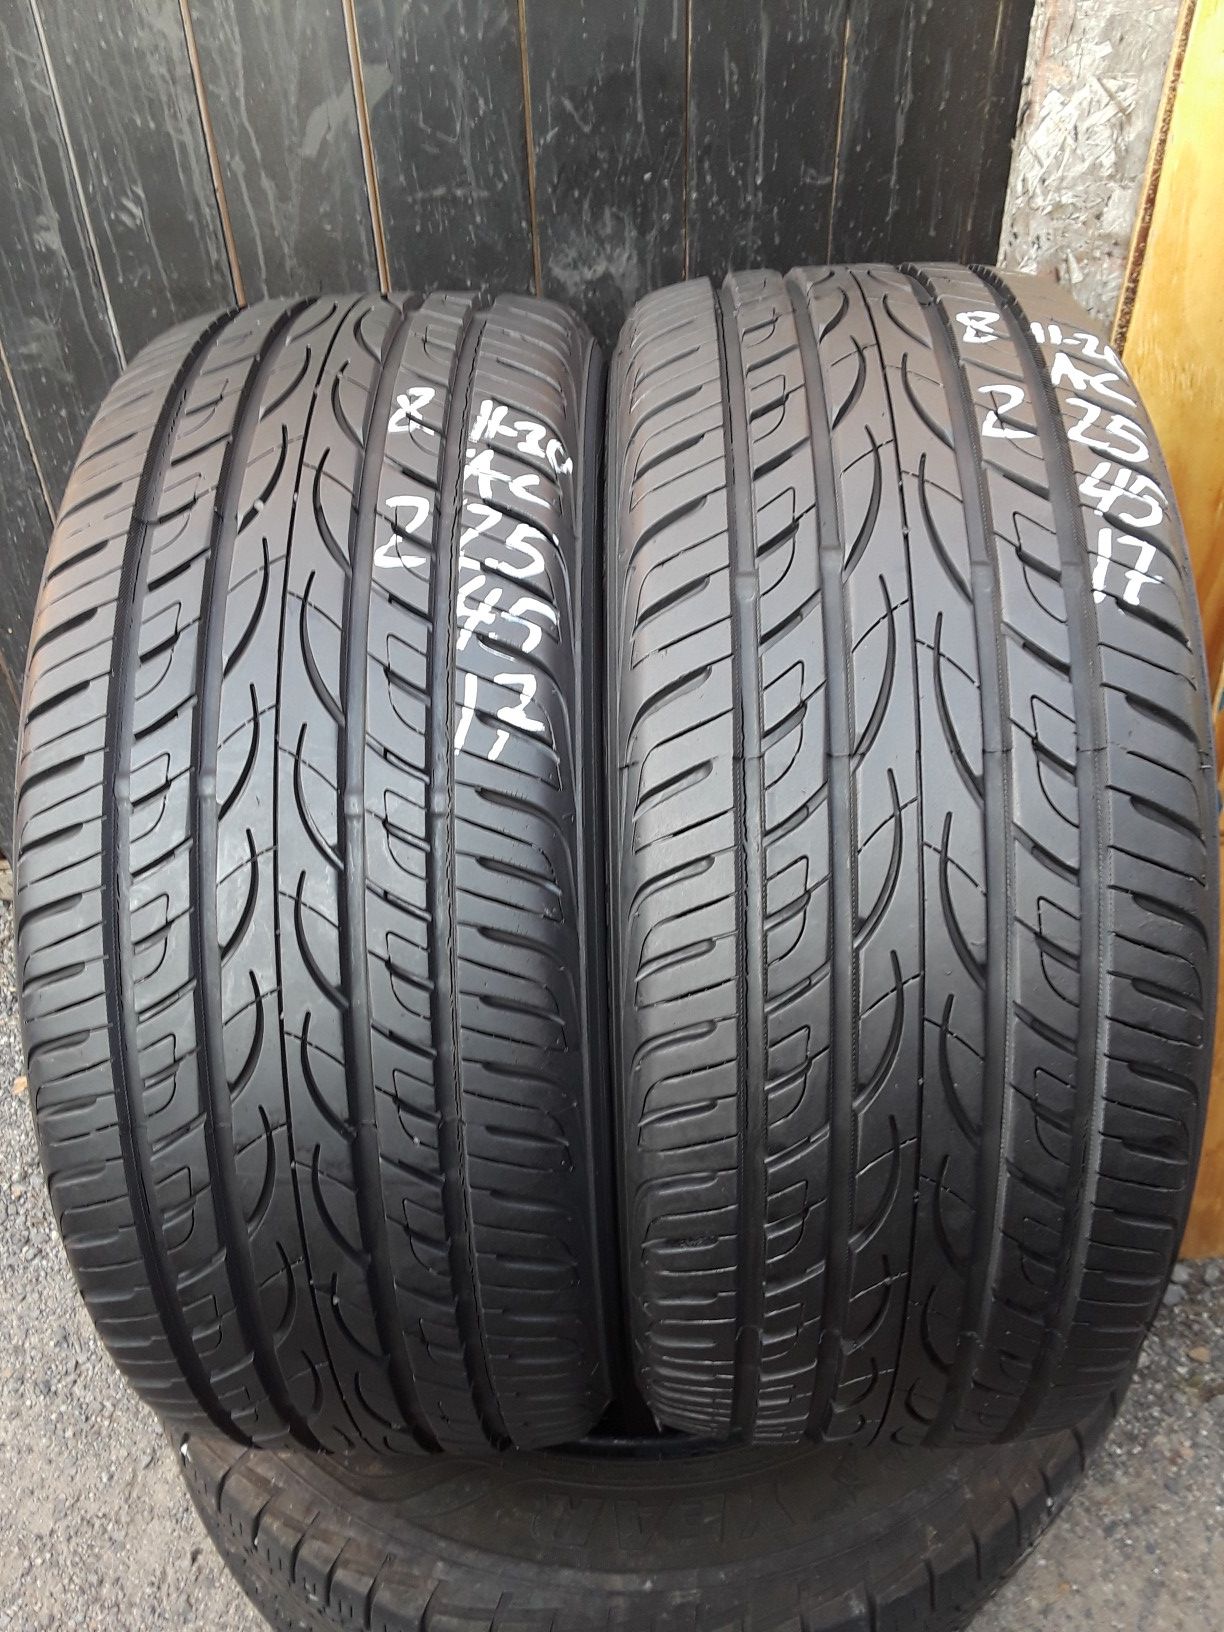 225/45-17 #2 tires